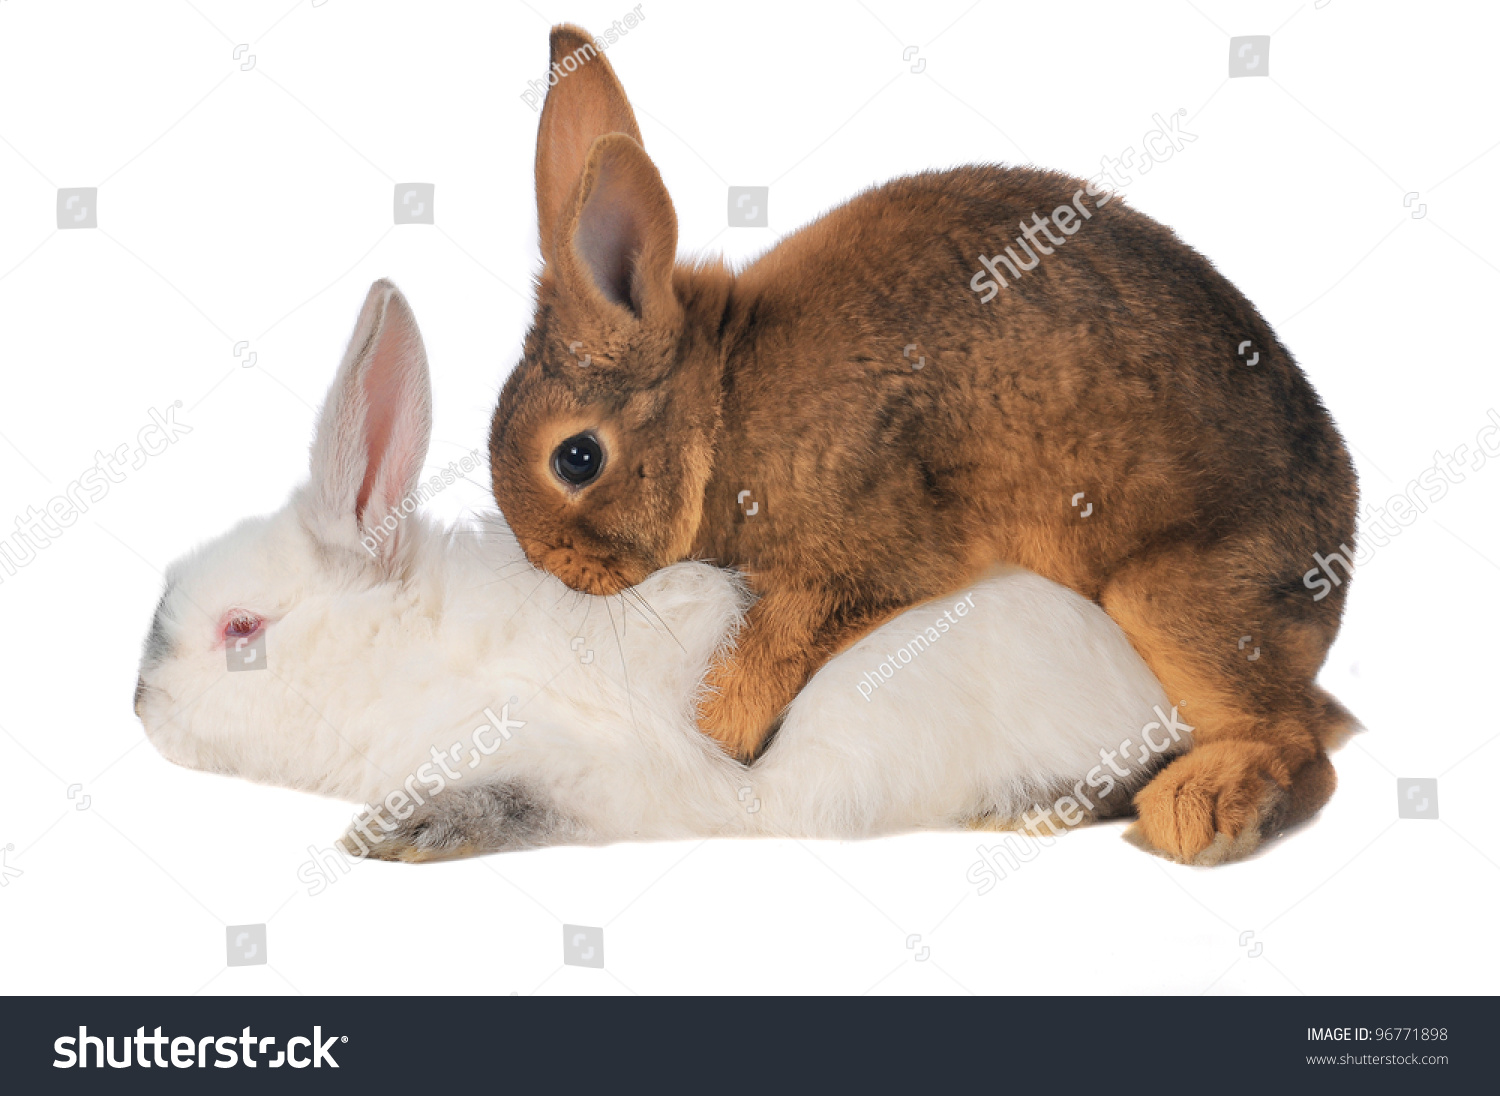 The Rabbit Sex 36